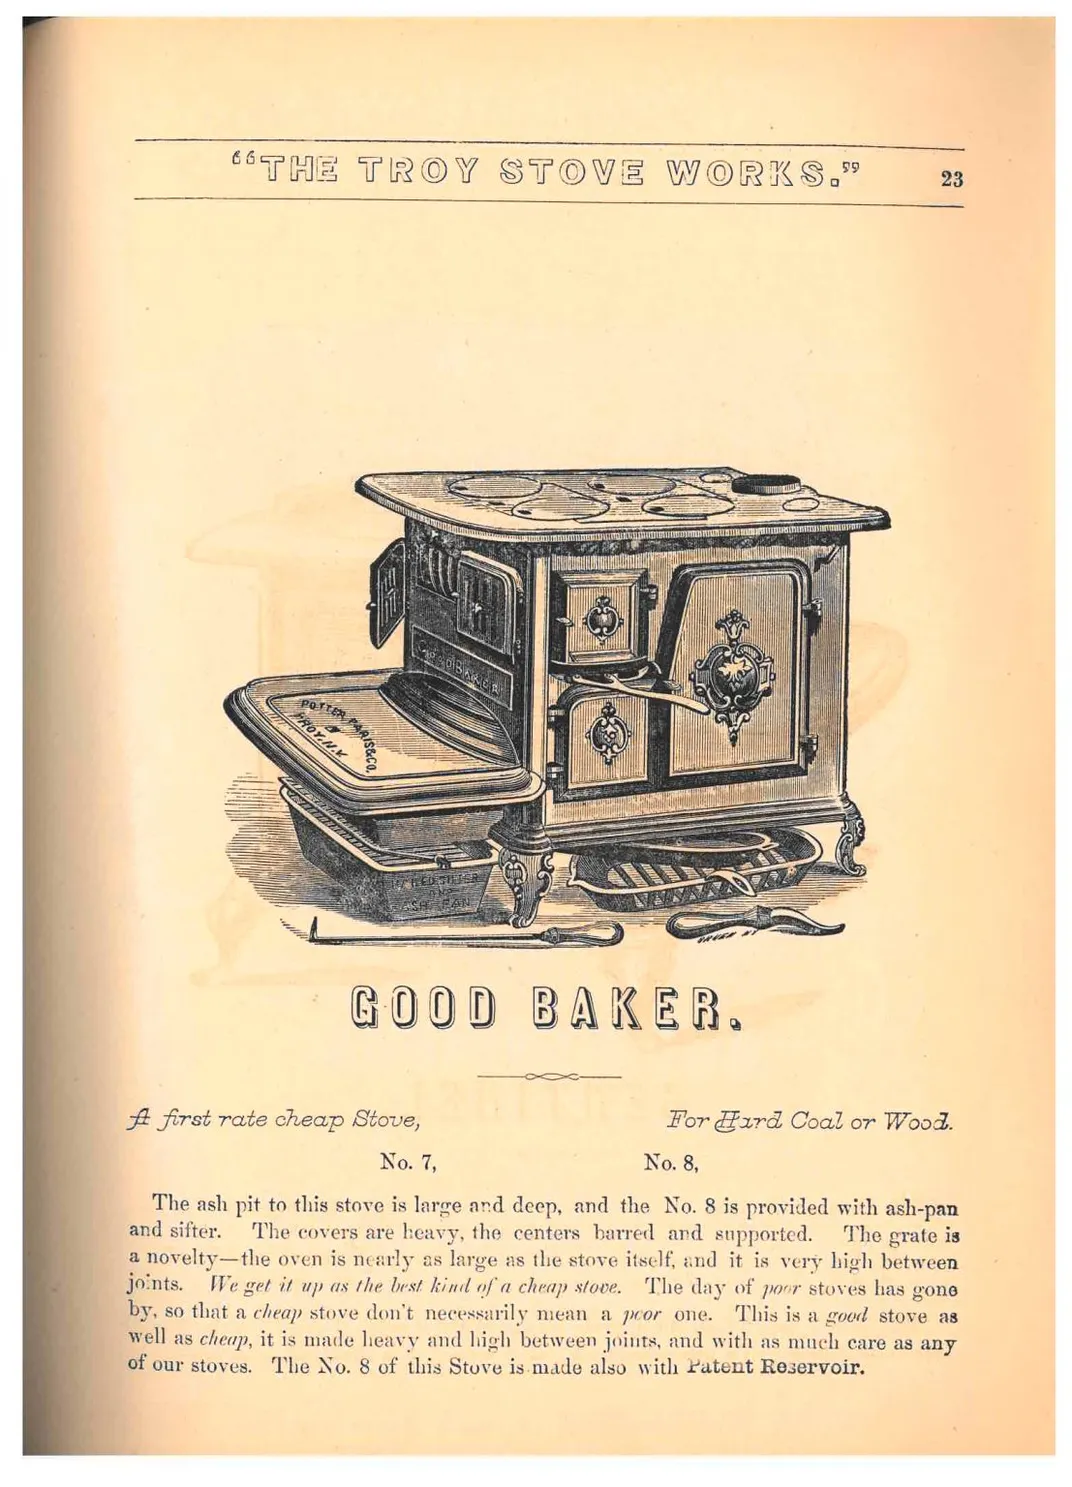 Trade catalog illustration of coal/wood stove